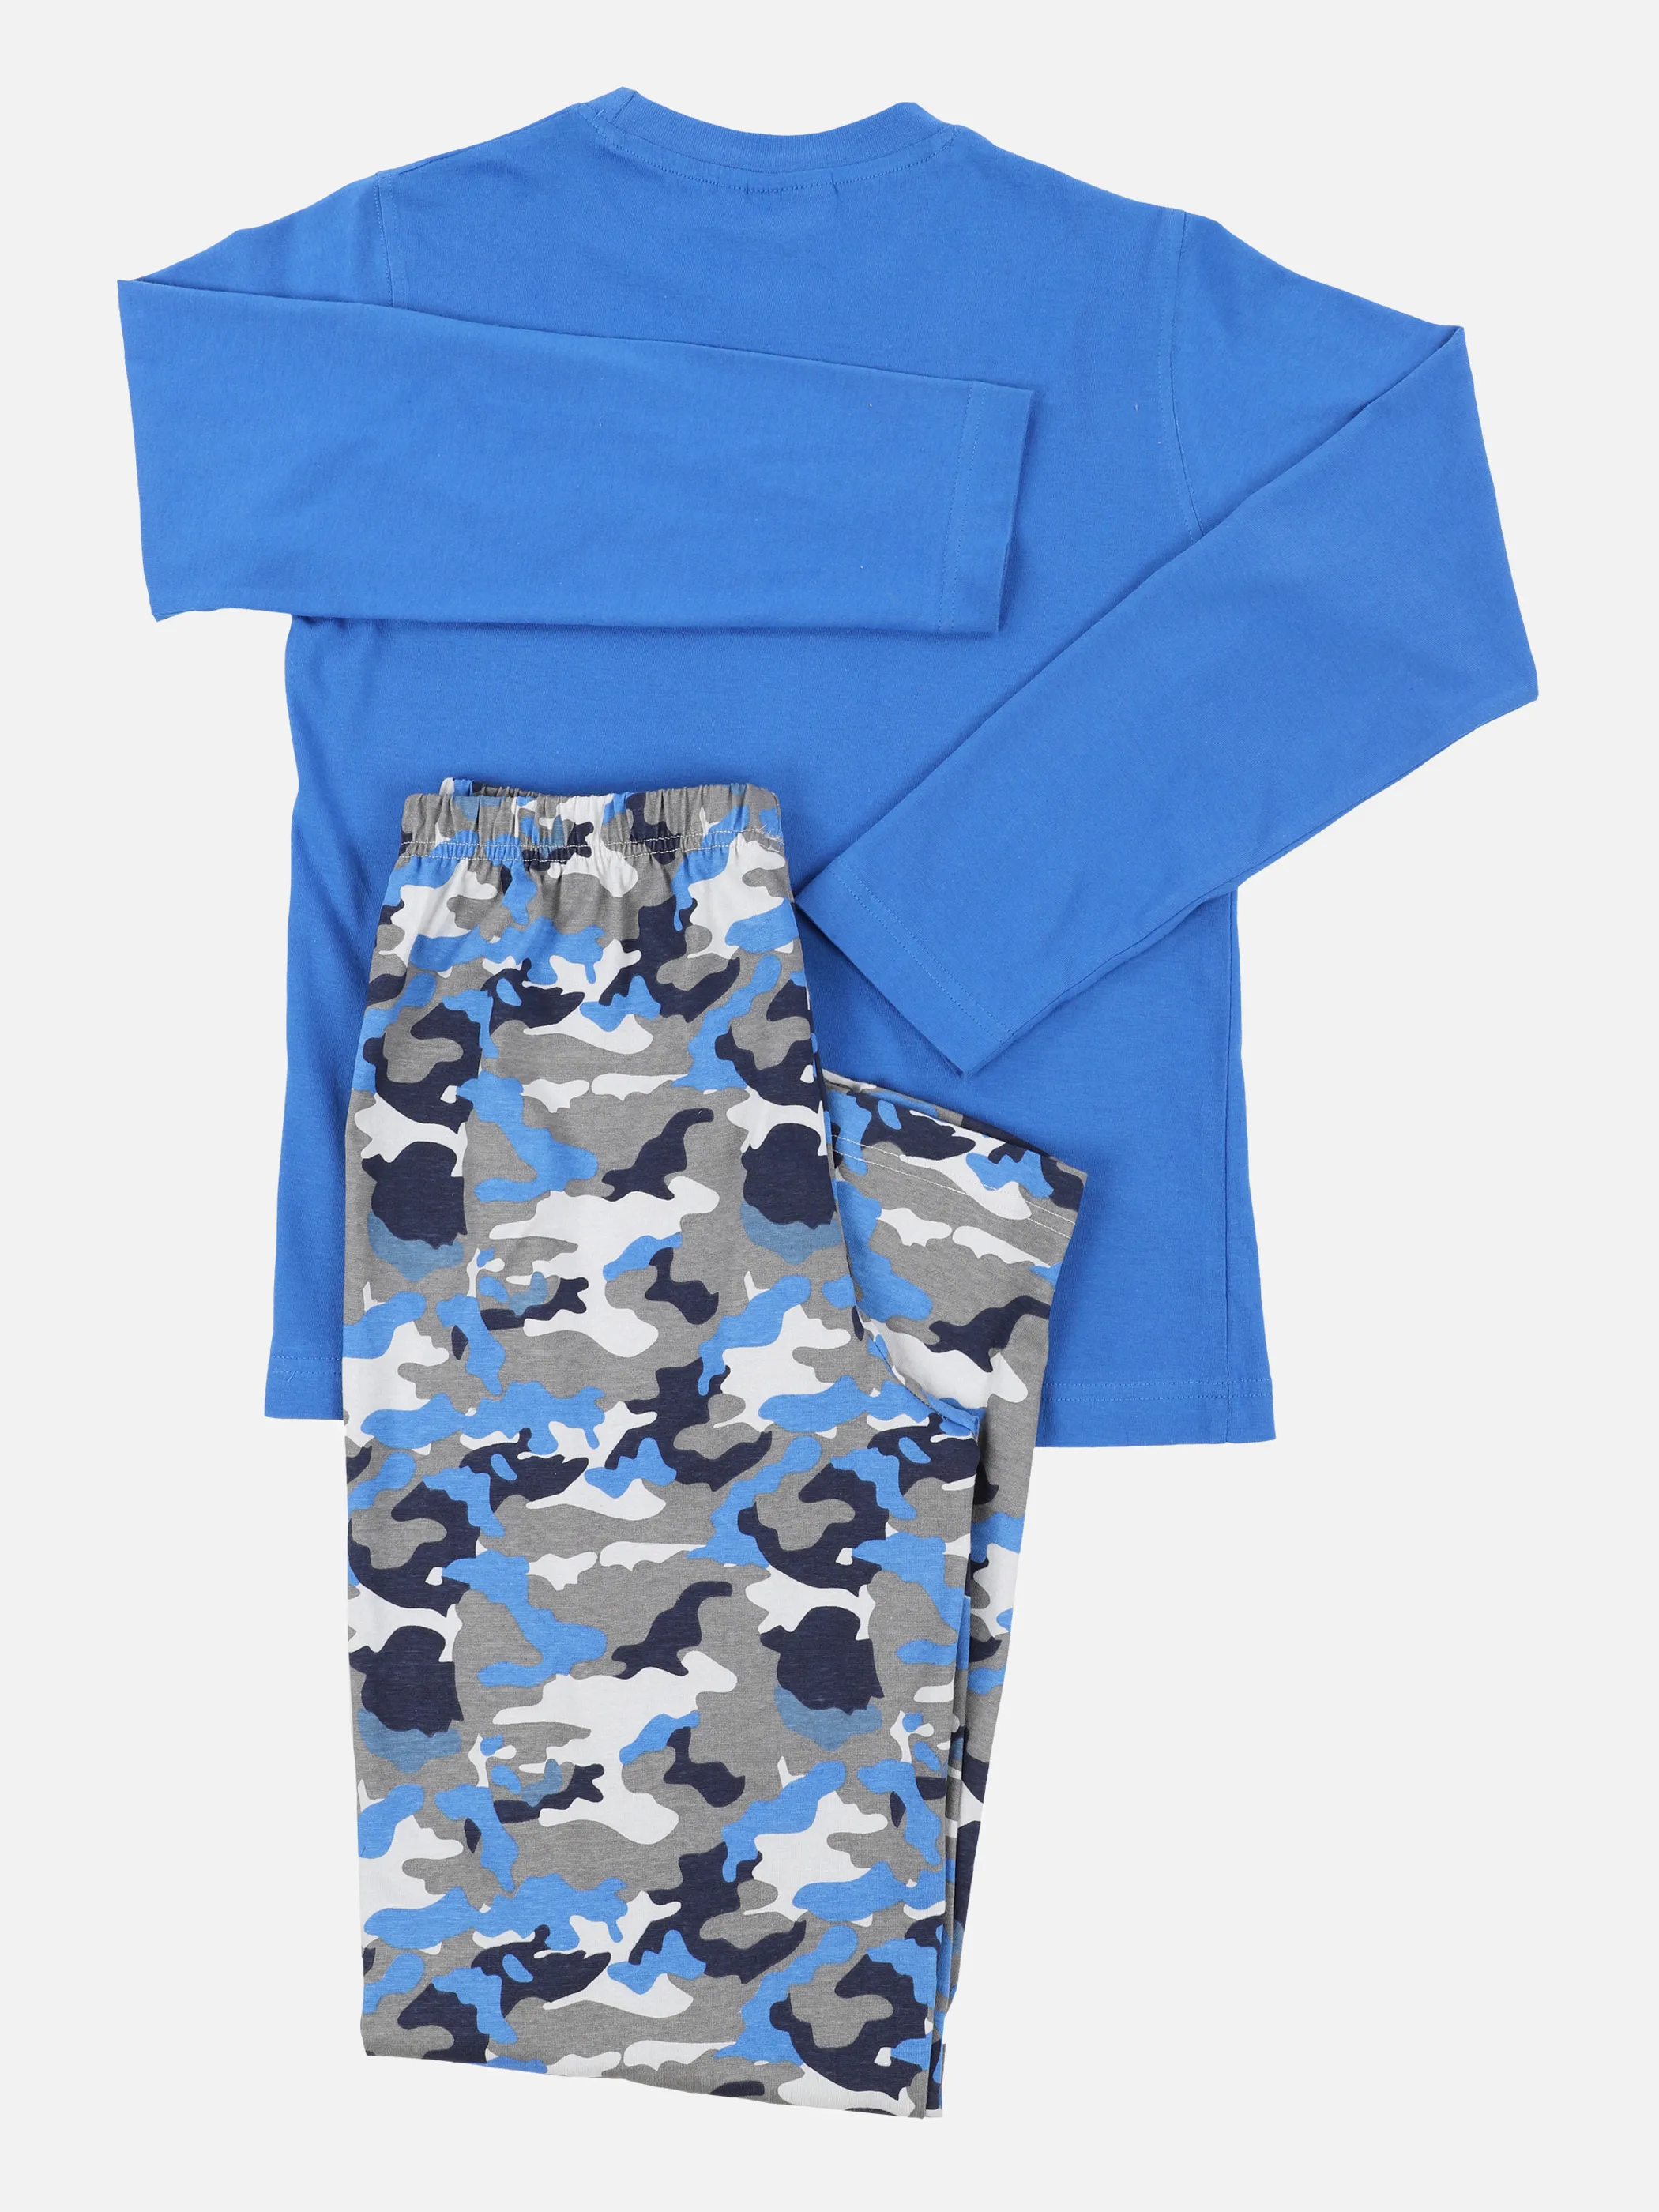 Stop + Go TB Pyjama lang Camouflage Prin Blau 868434 ROYAL/BLAU 2